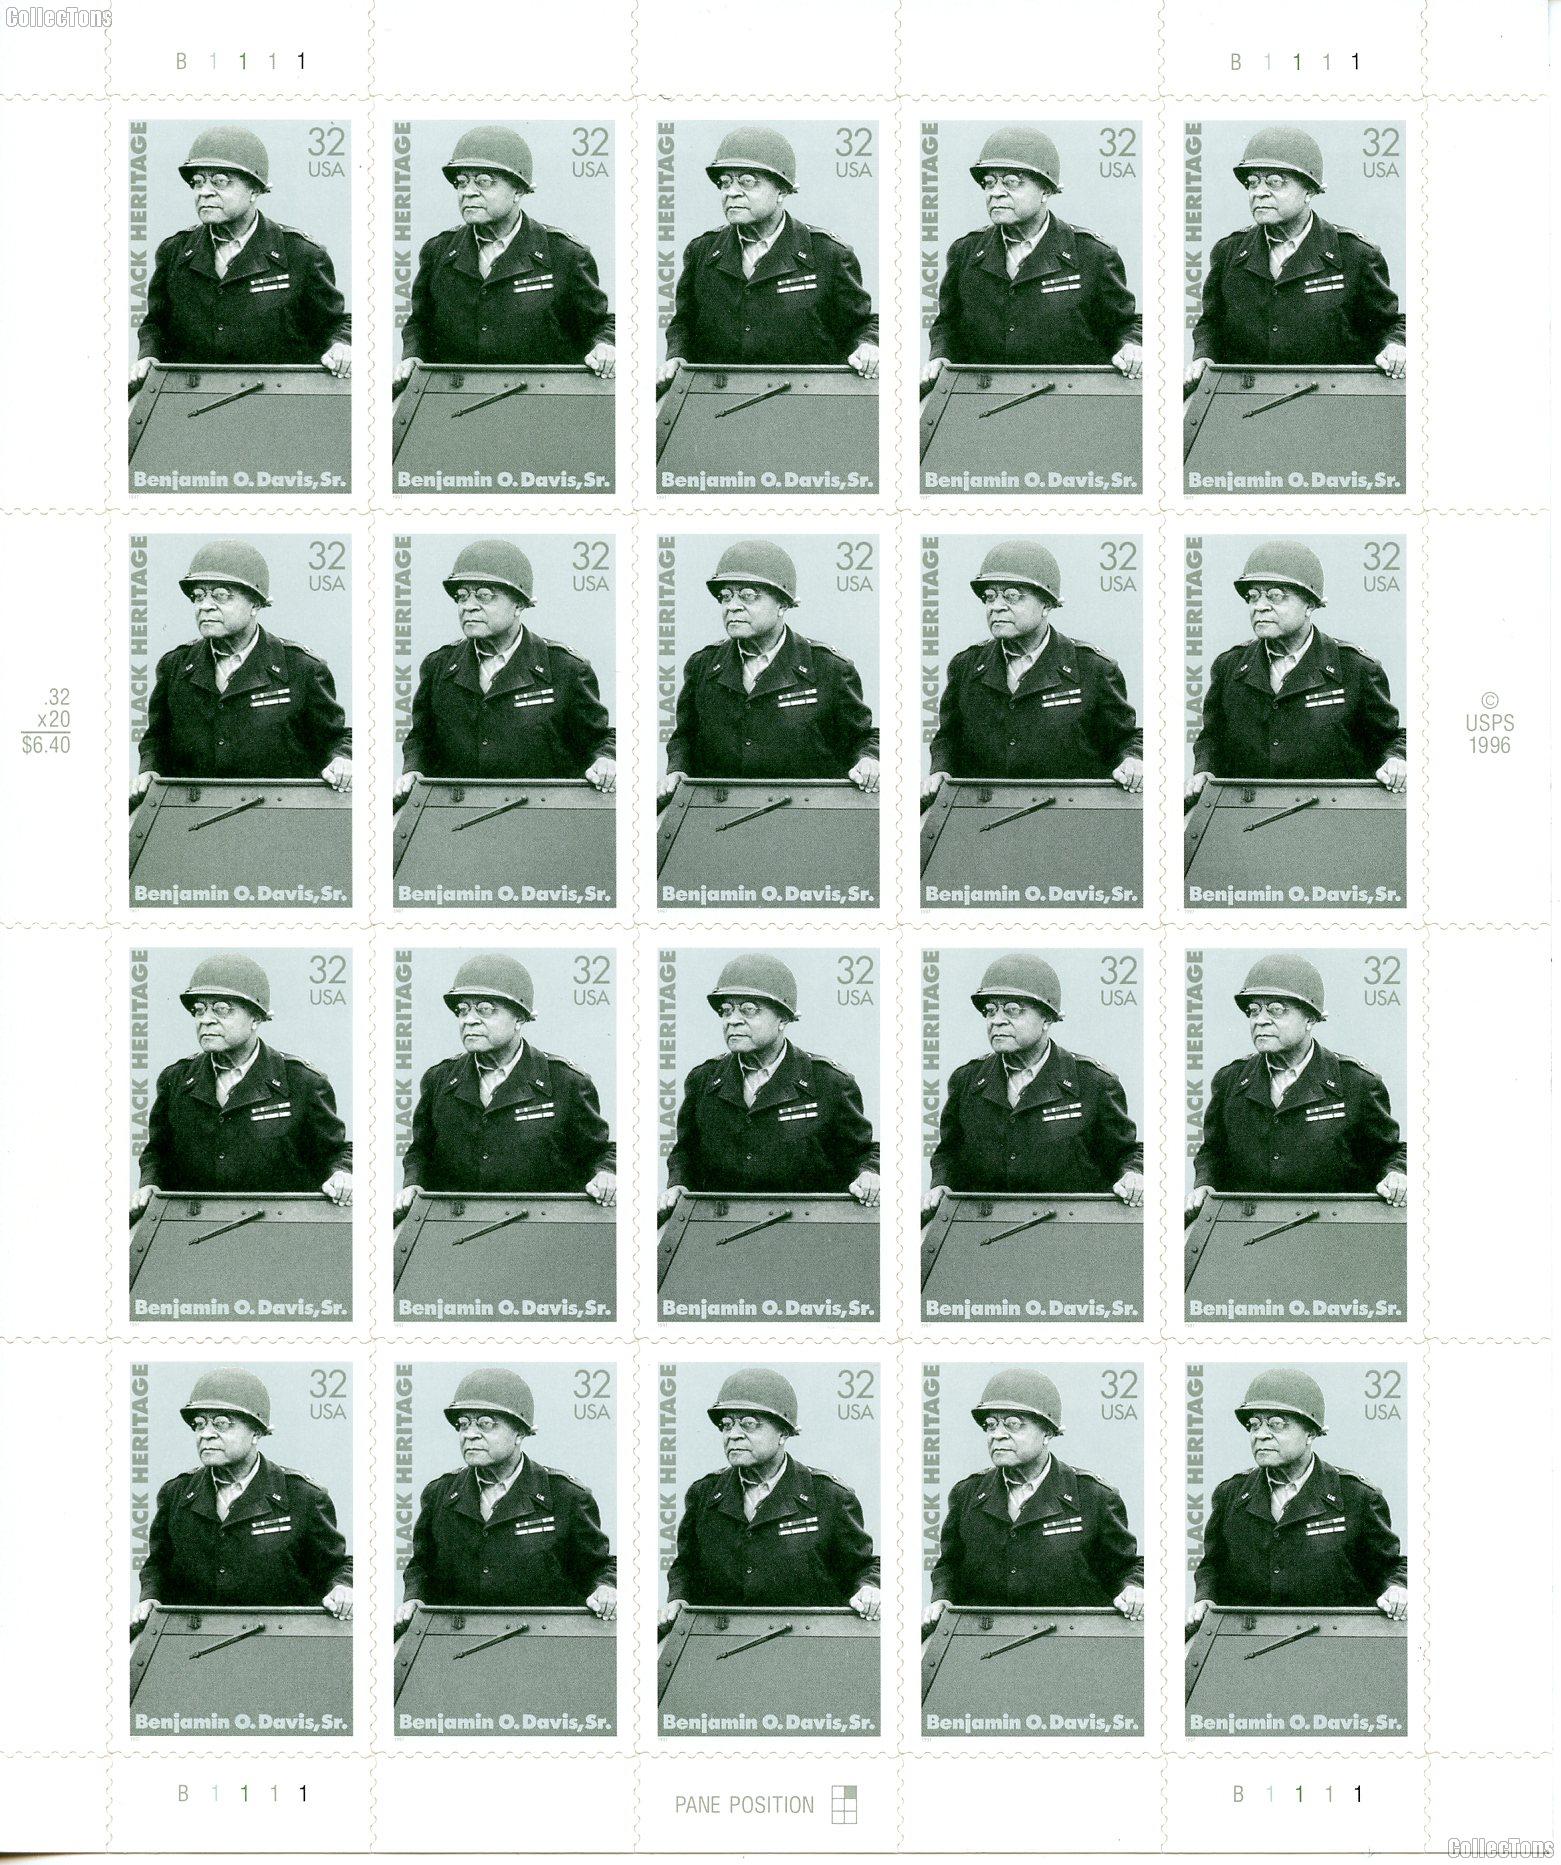 1997 Benjamin O. Davis Sr. 32 Cent US Postage Stamp Unused Sheet of 20 Scott #3121